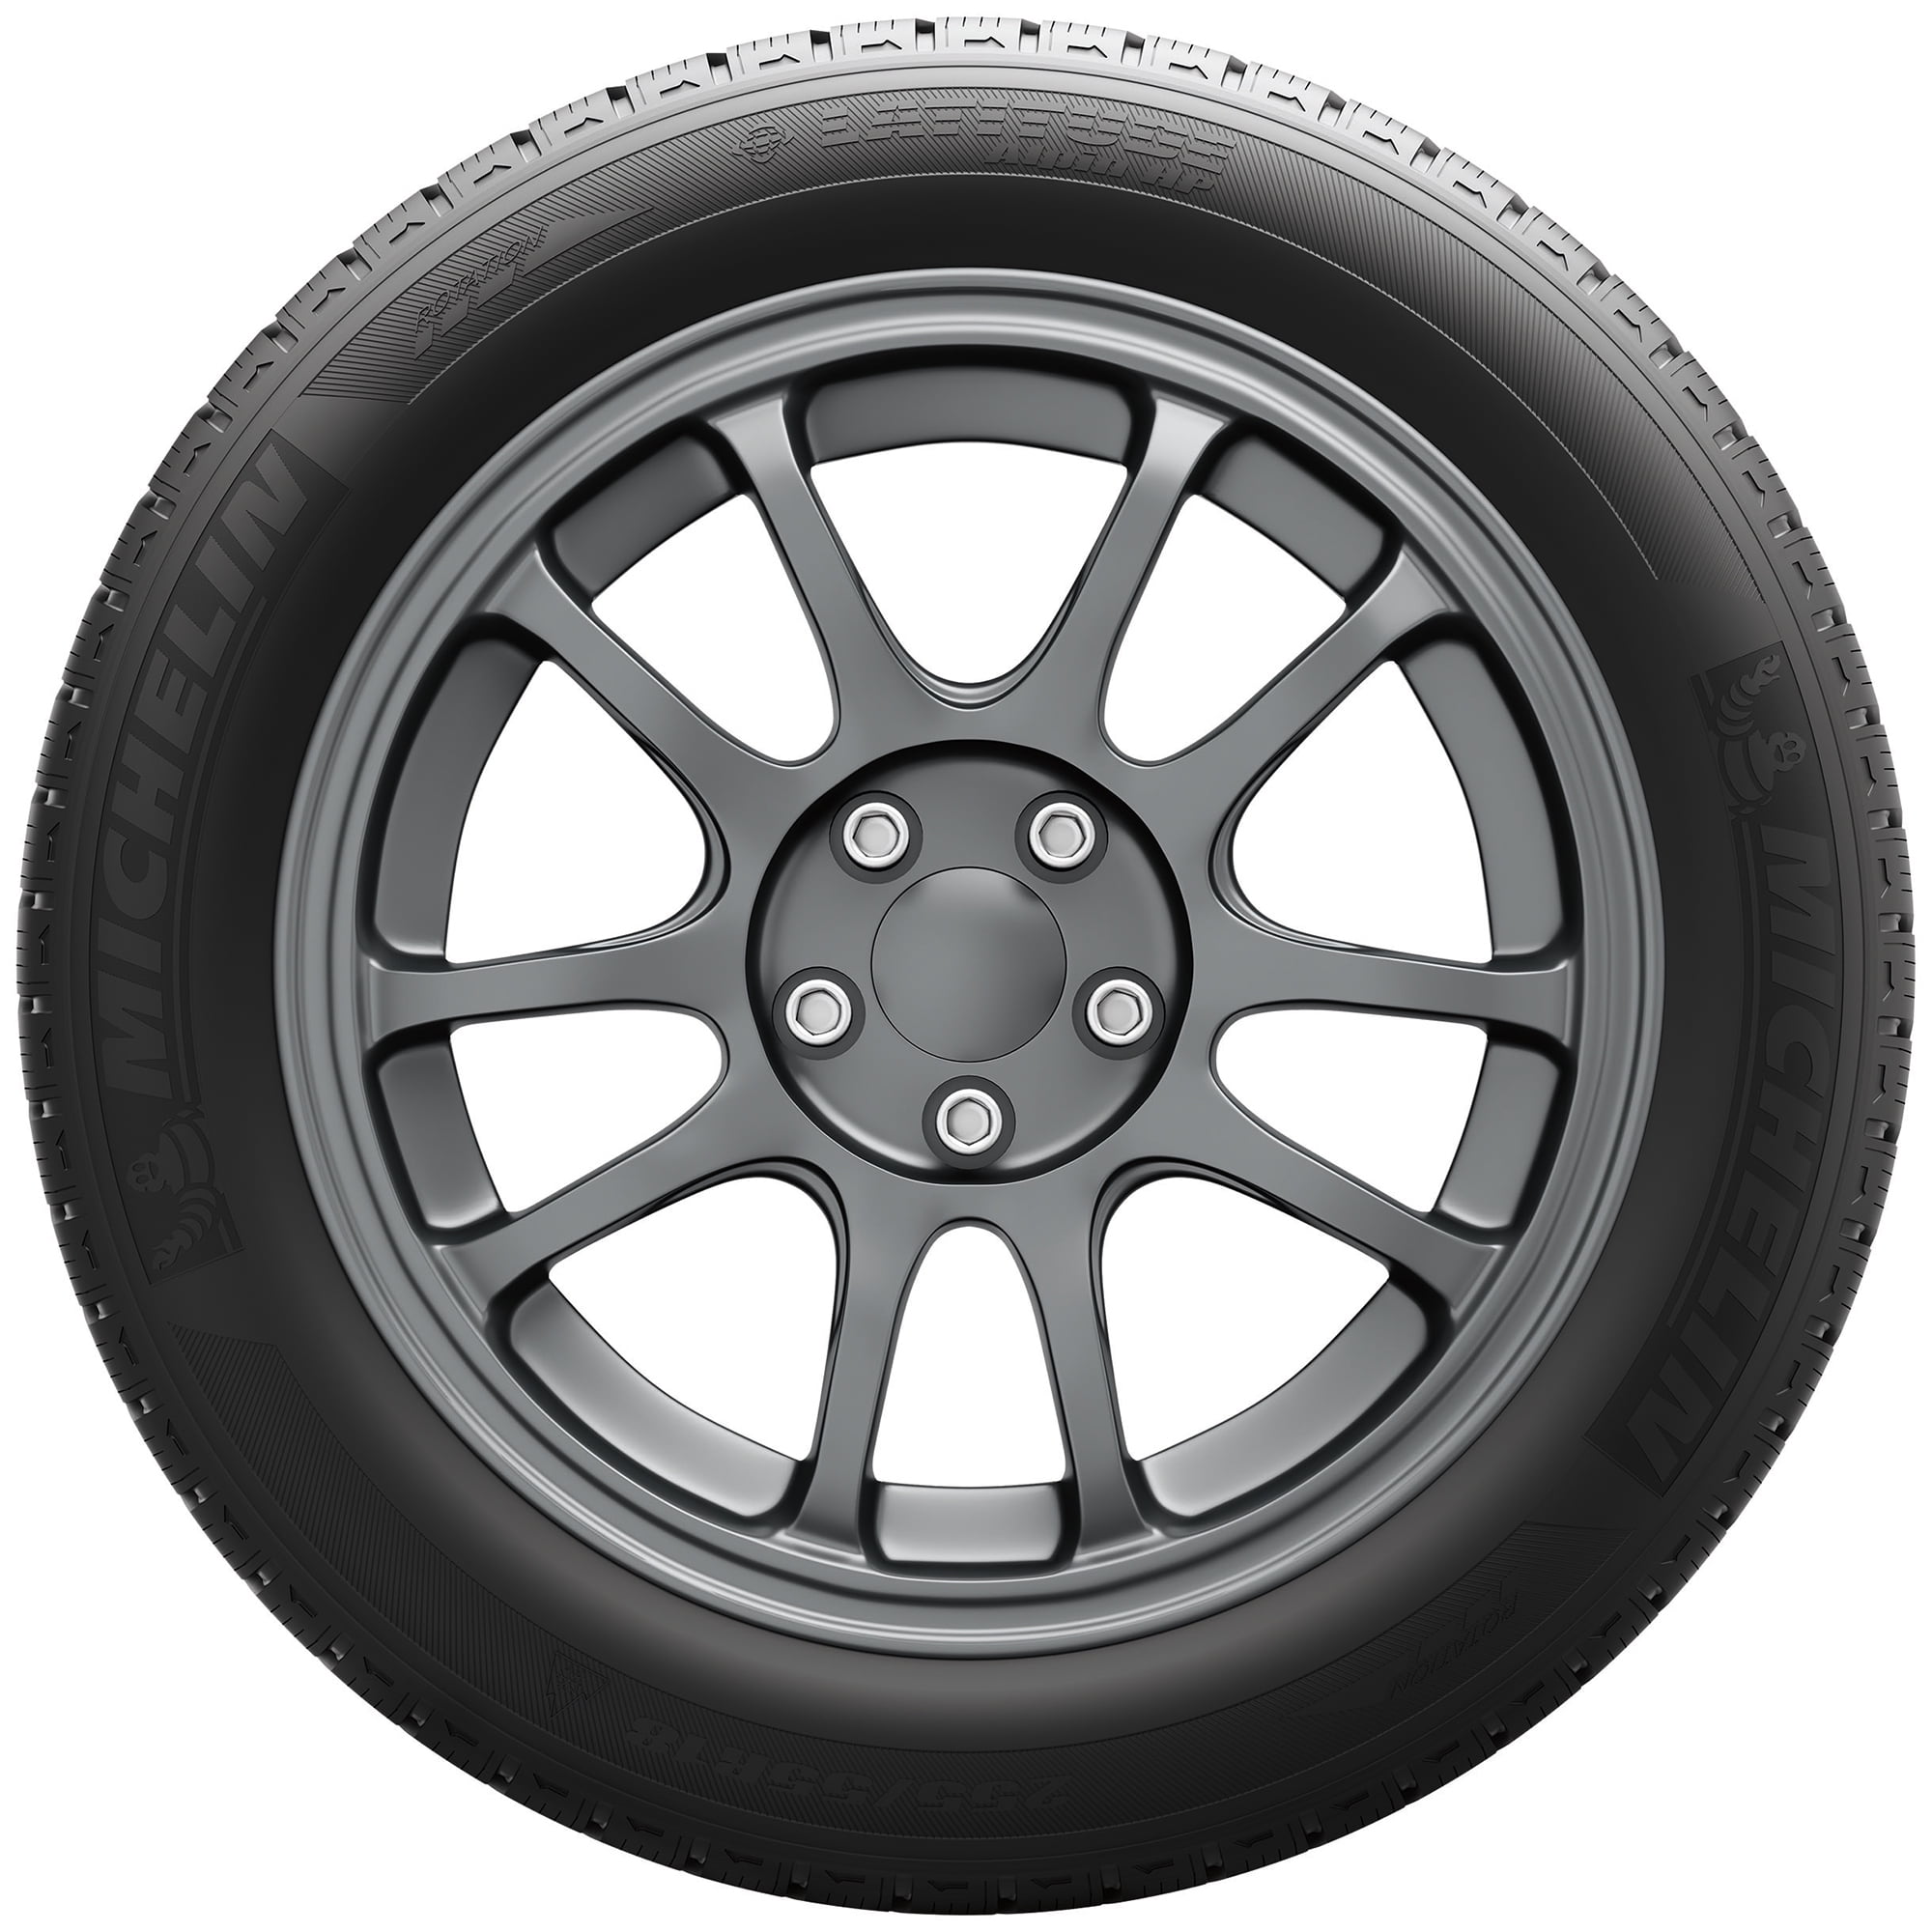 High Latitude 105H 255/55R18 Michelin Tire Alpin Performance